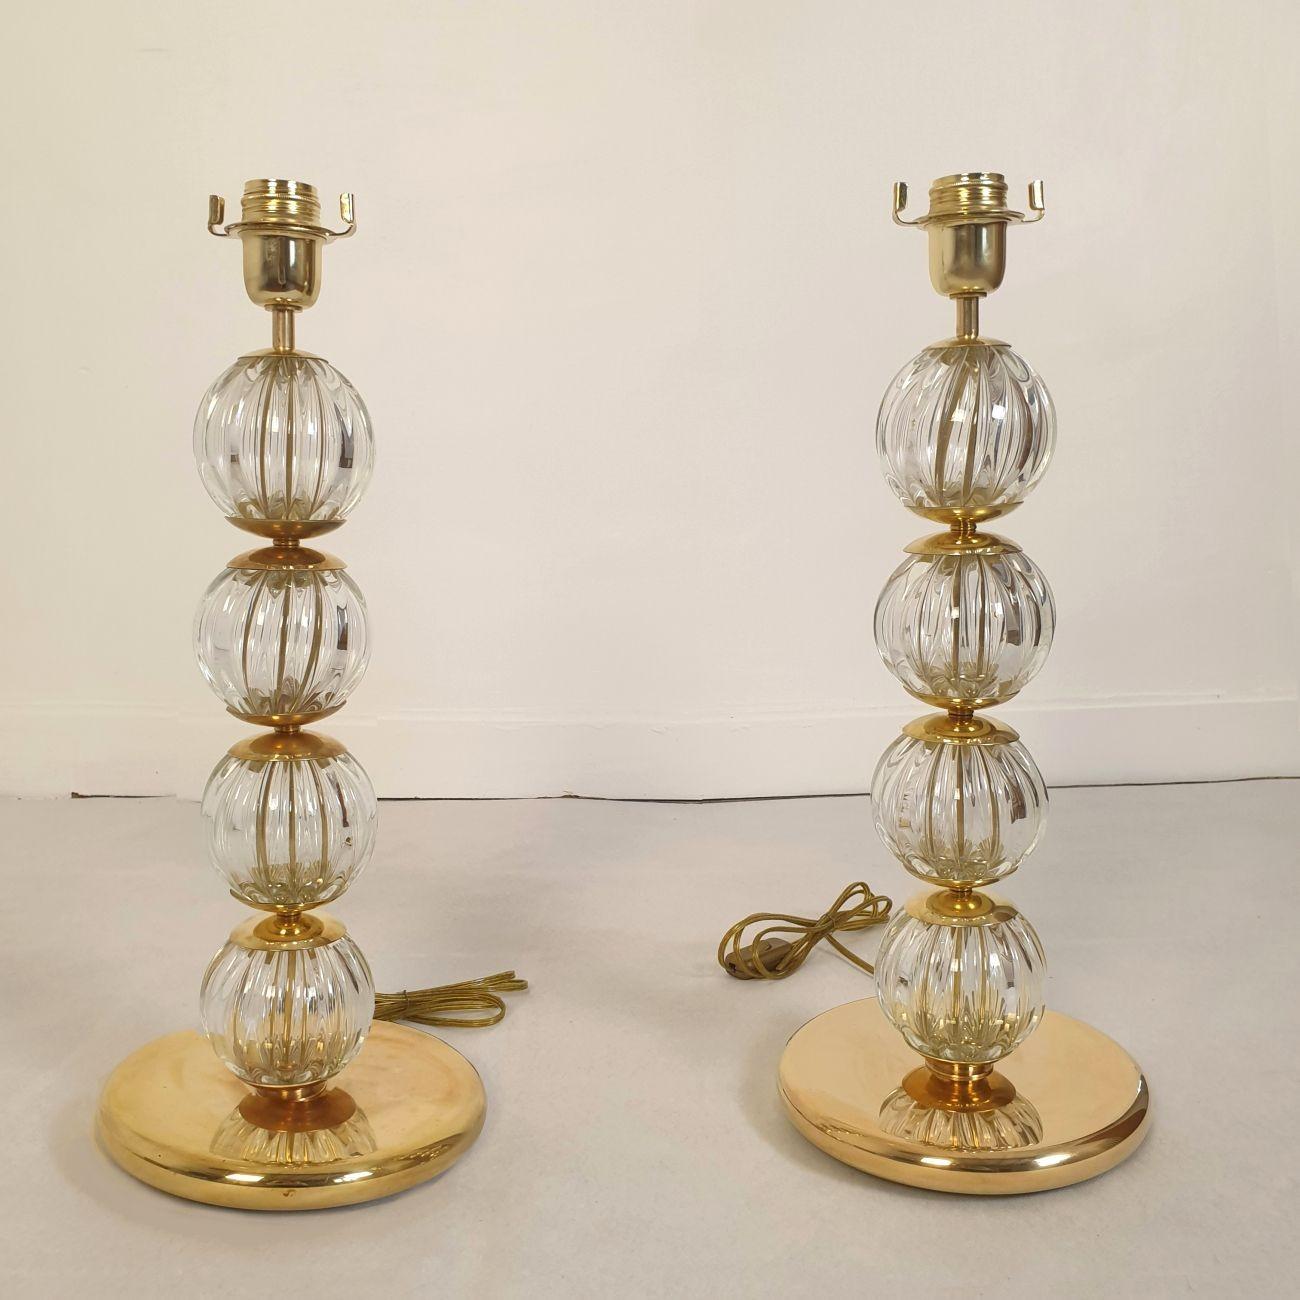 Italian Murano glass table lamps - a pair